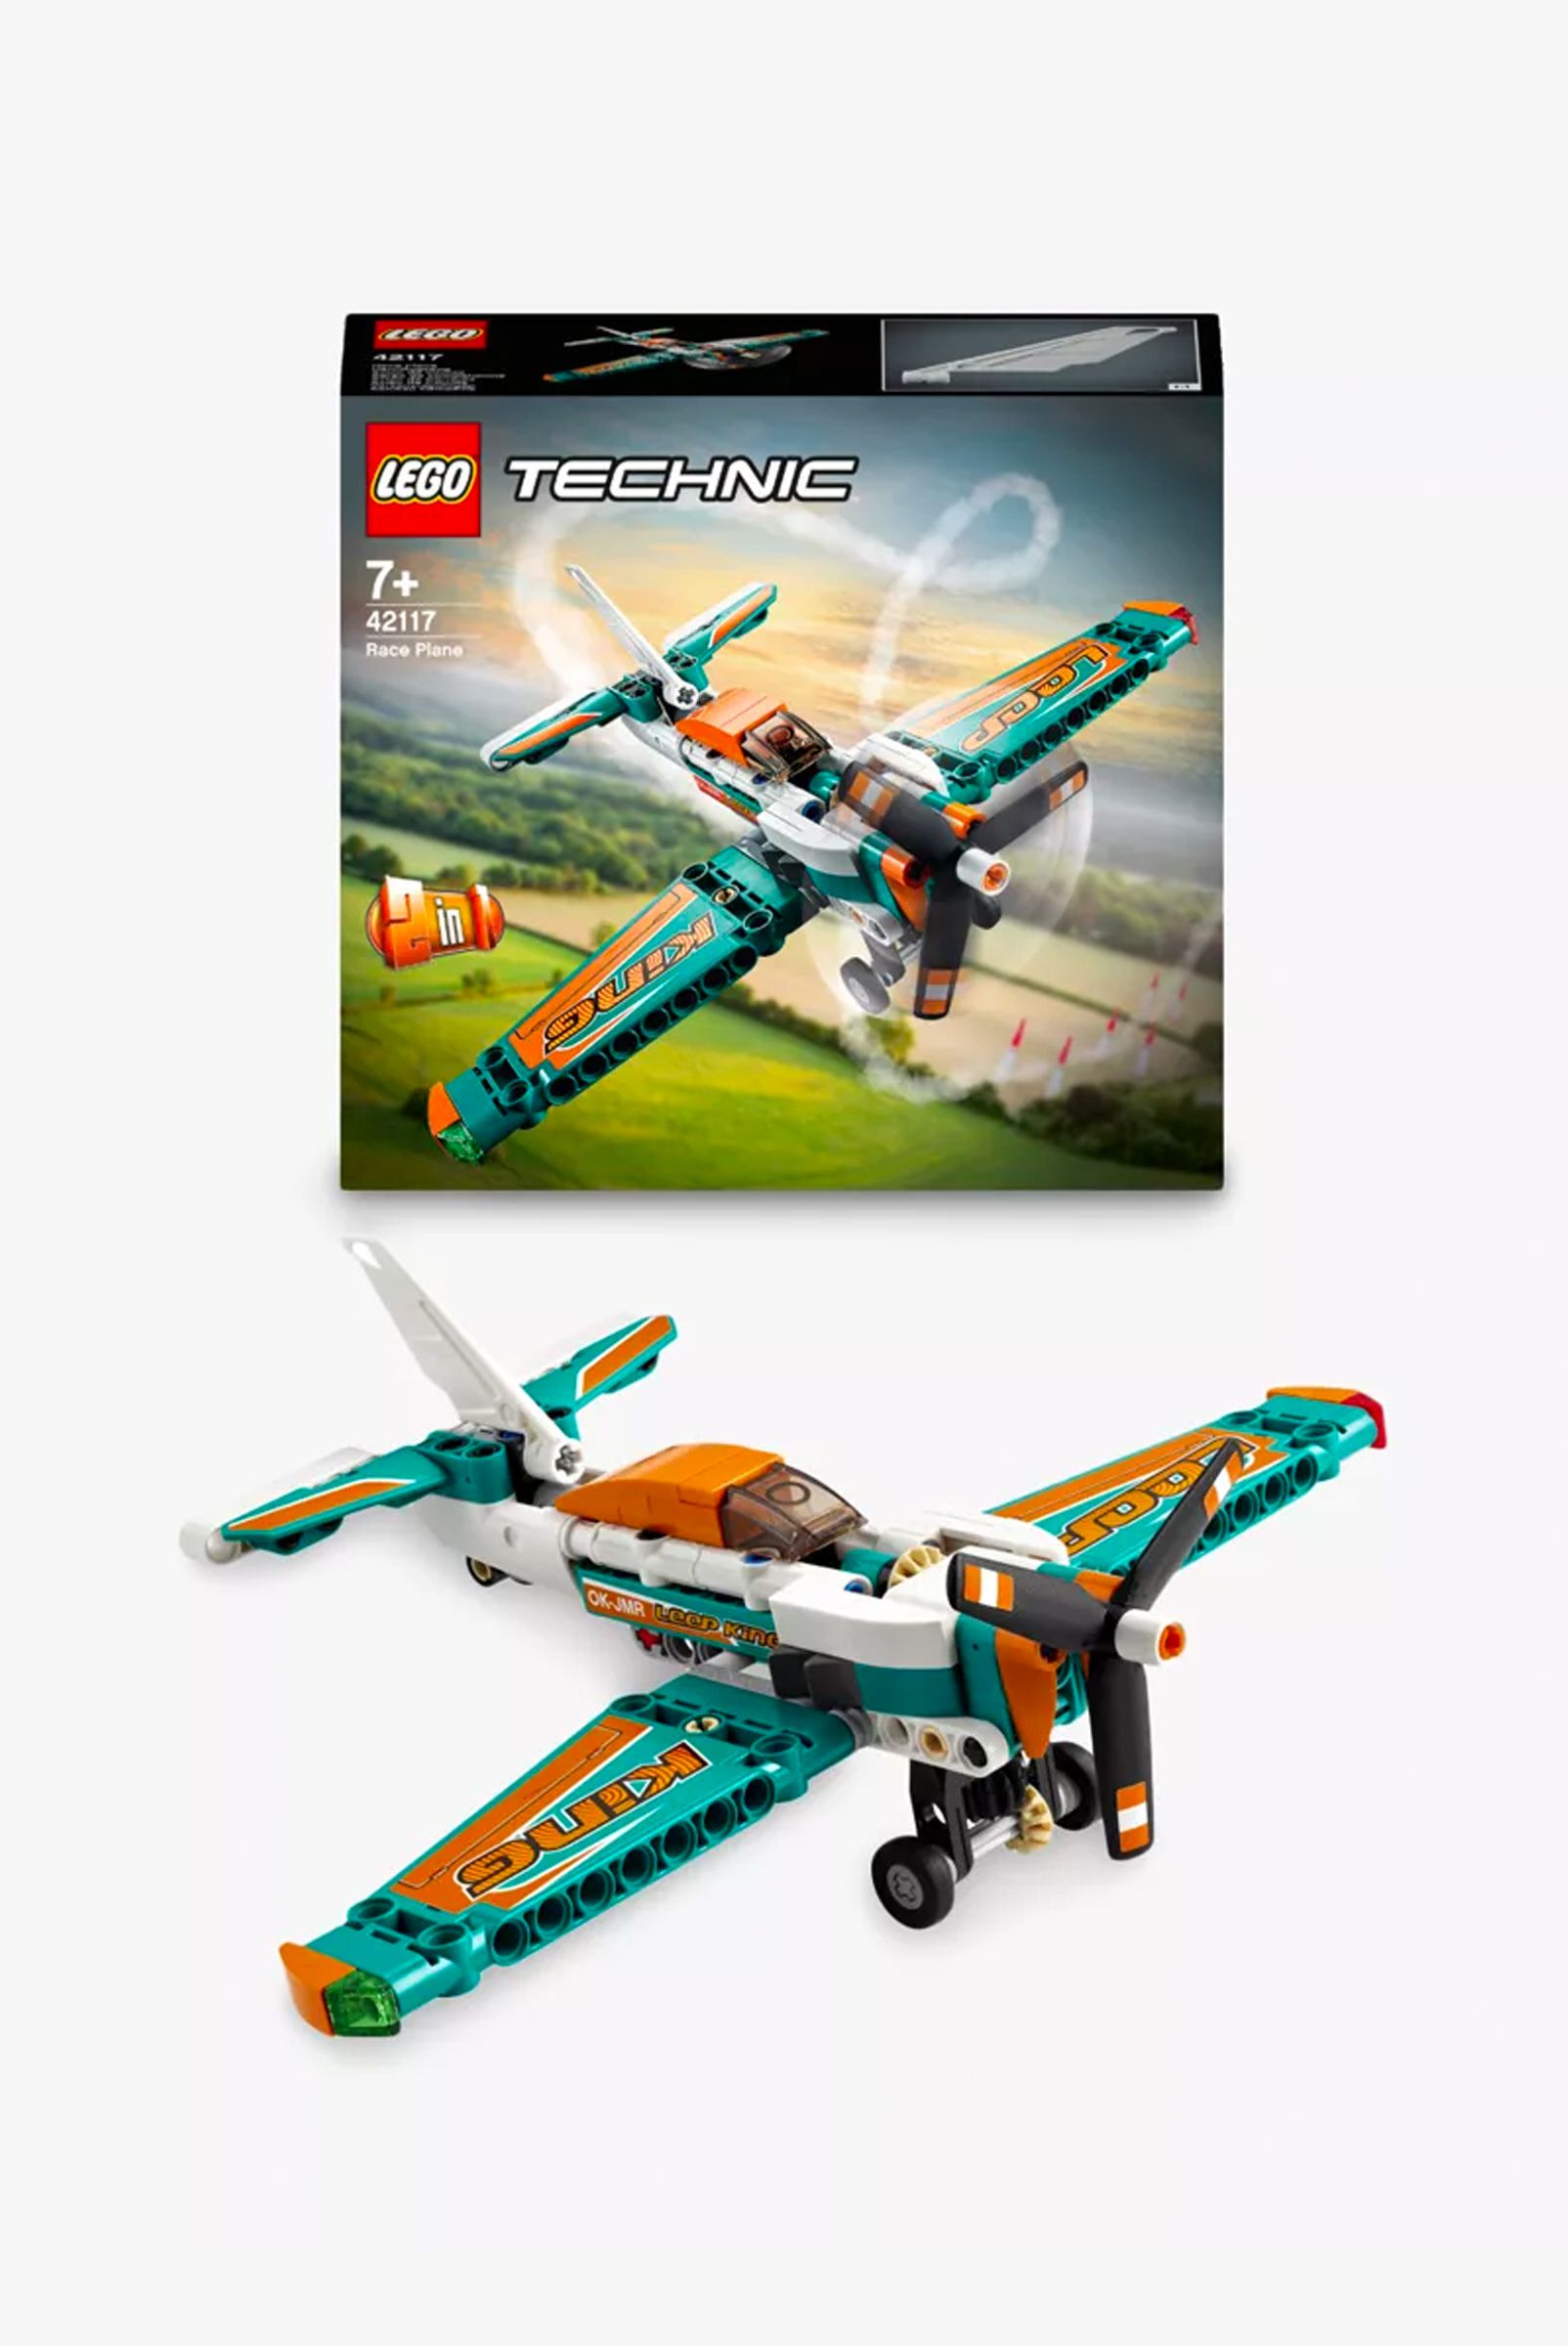 LEGO Technic 42117 Race Plane, £8.99